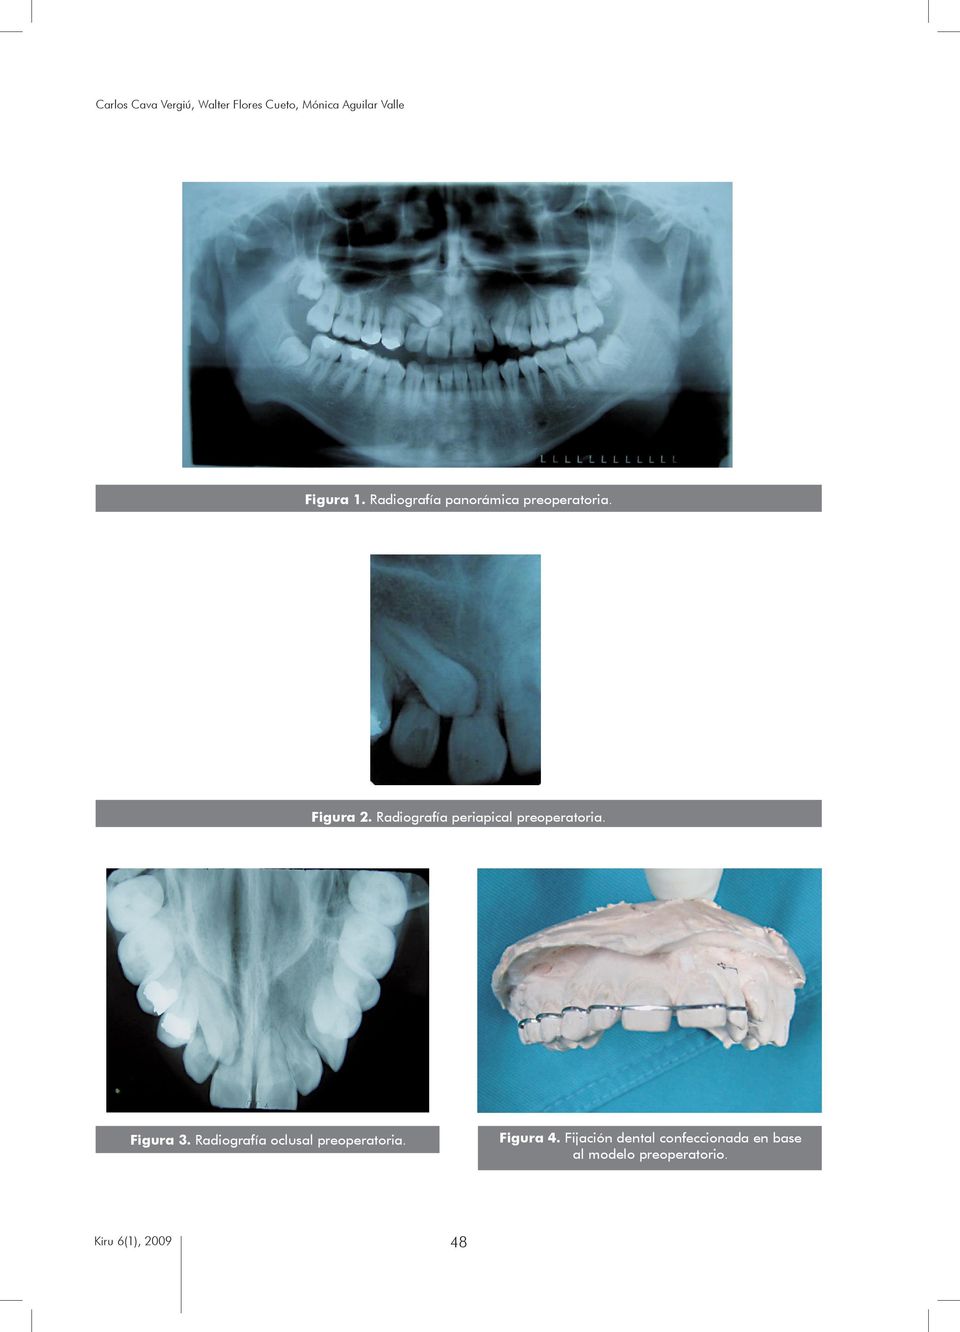 Radiografía periapical preoperatoria. Figura 4.